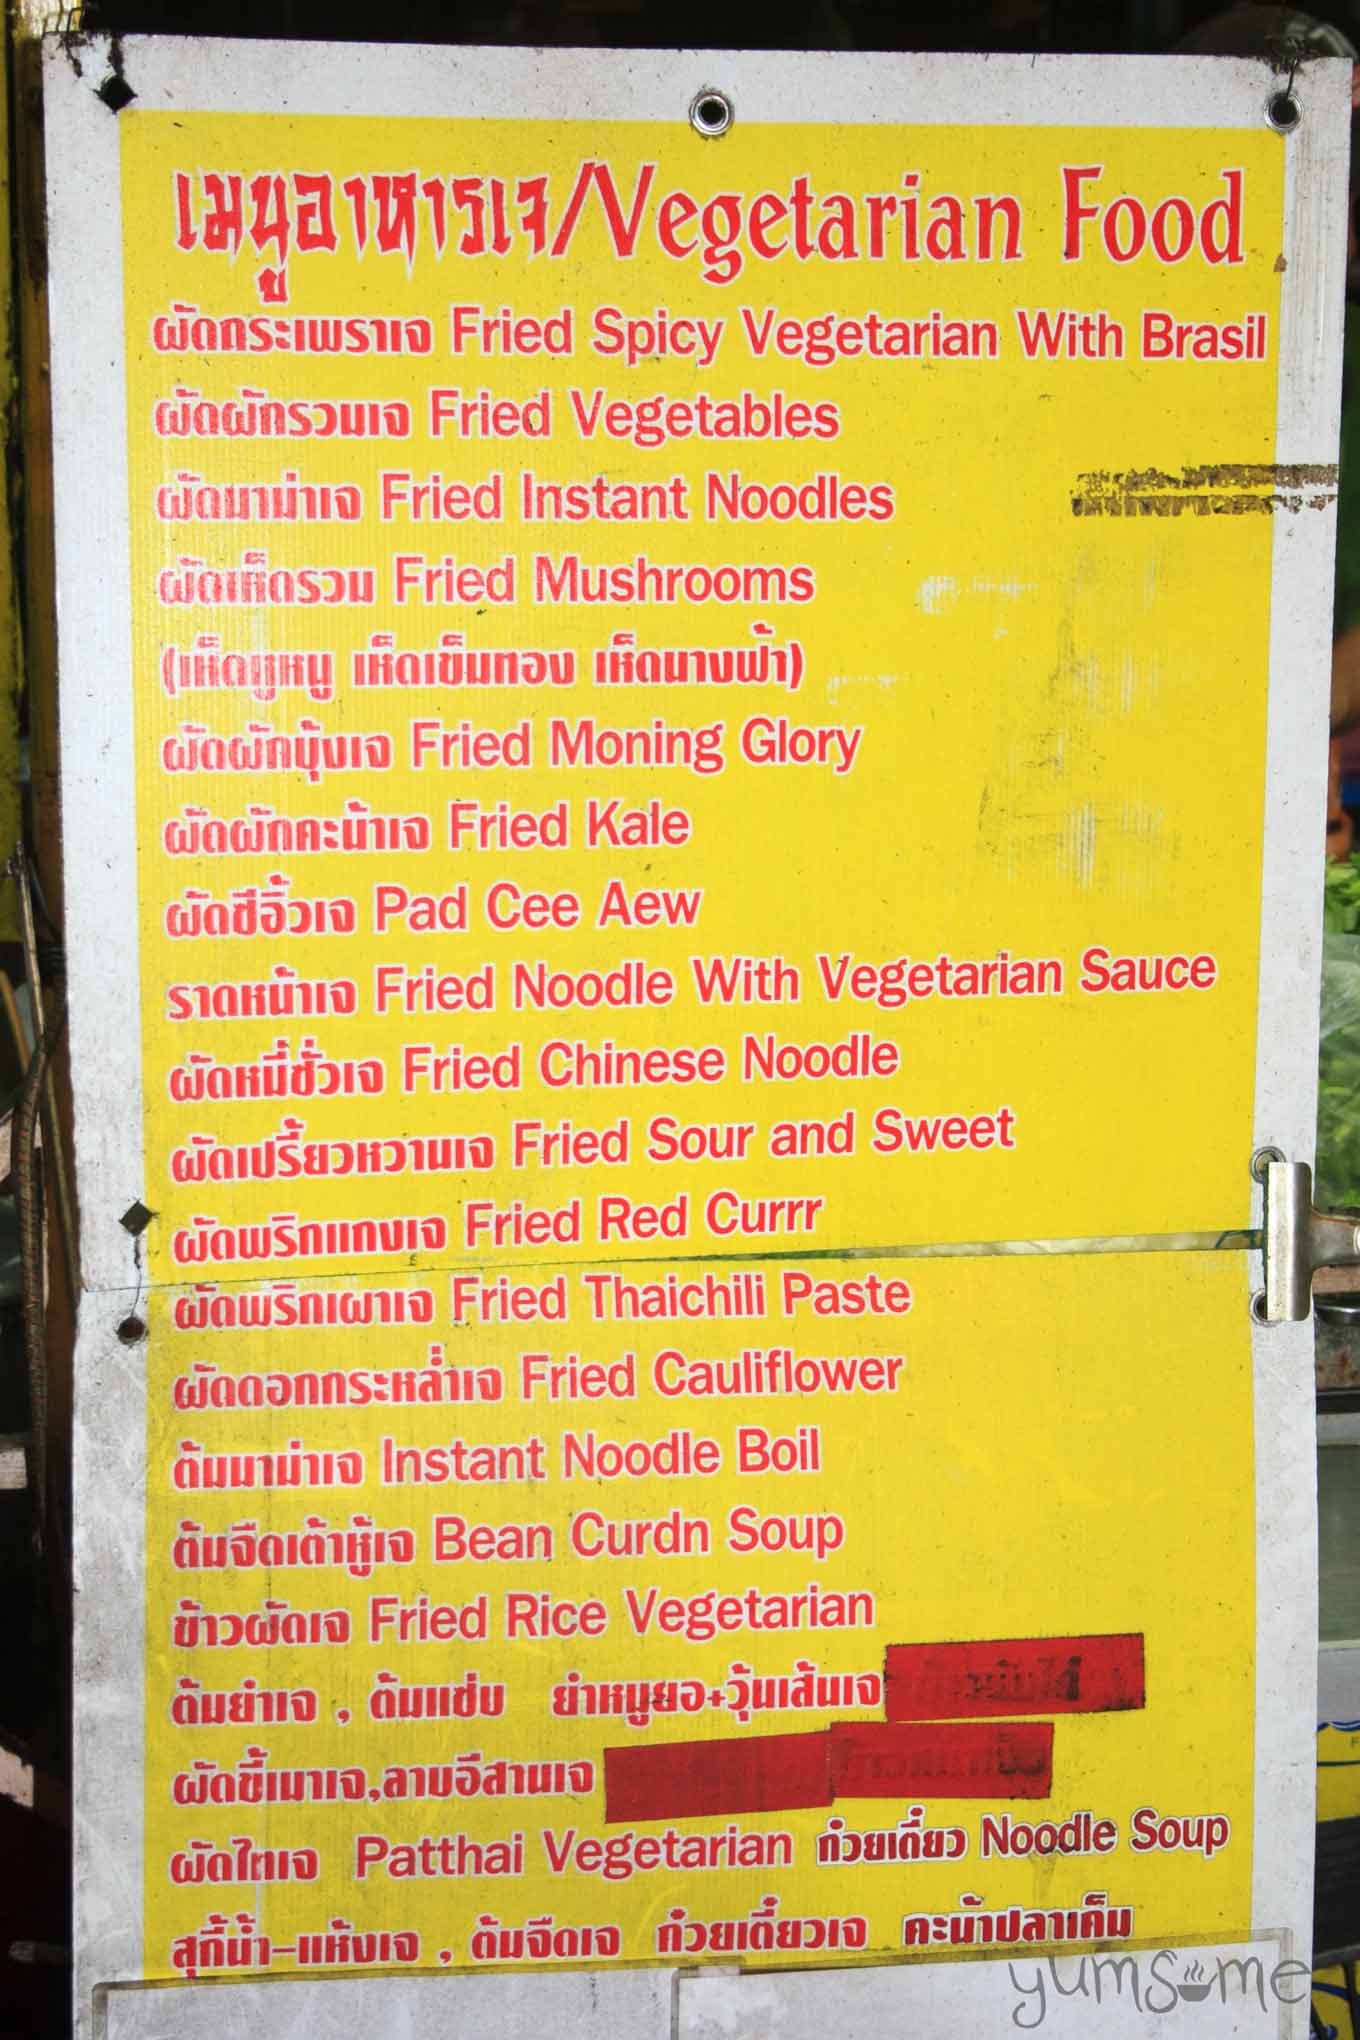 the vegan menu at Chiang Mai Gate night market | yumsome.com